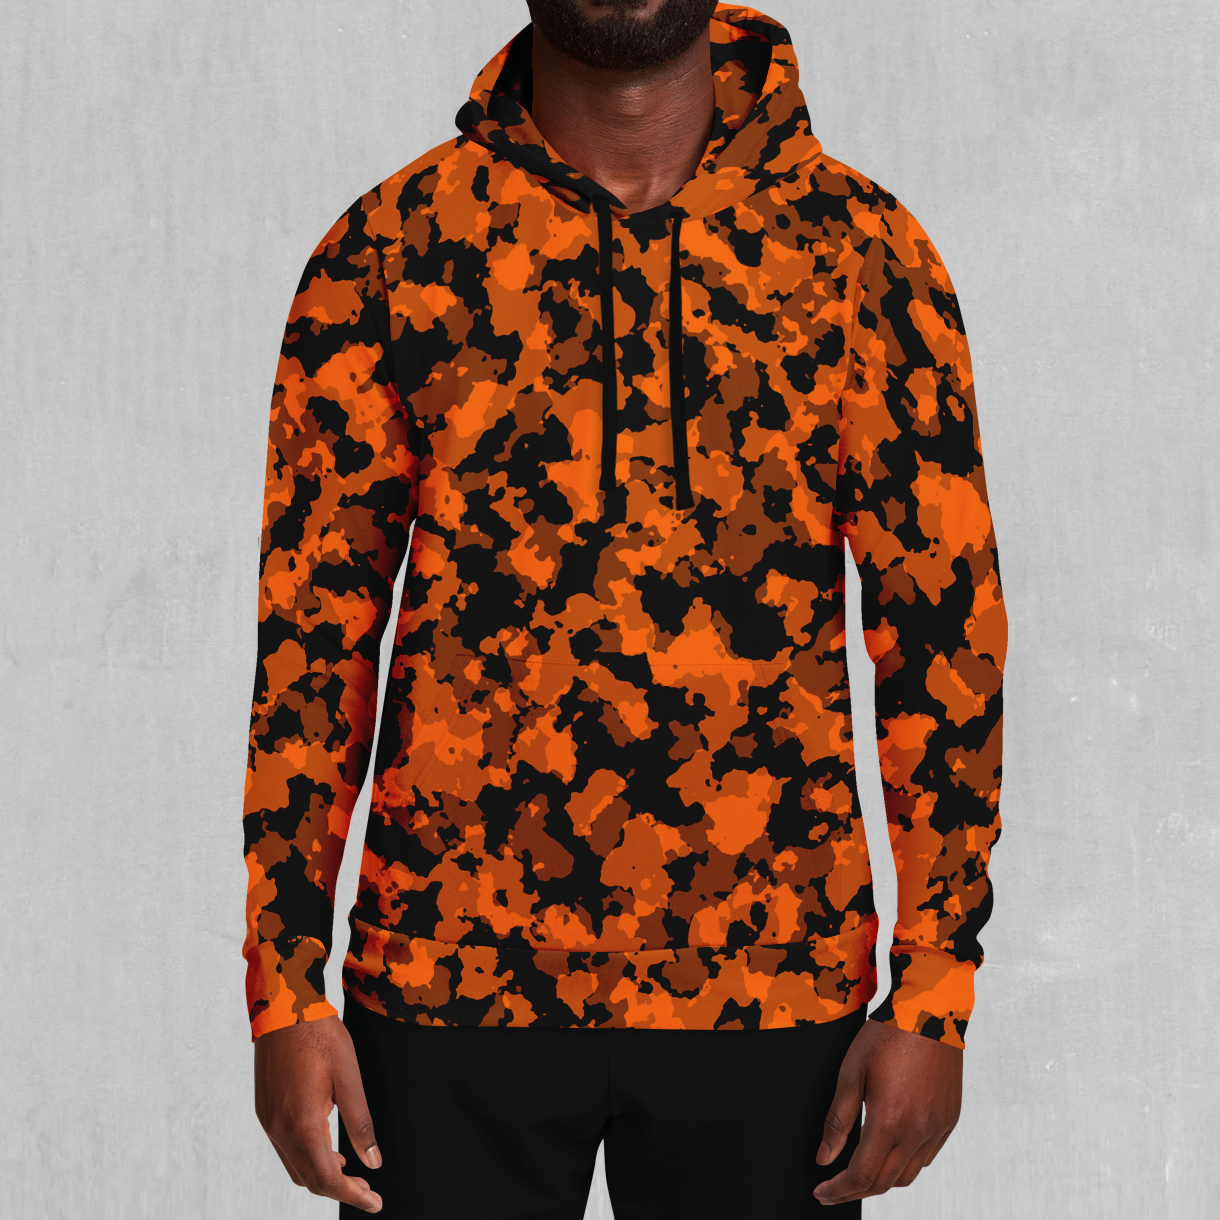 Perla En la madrugada claramente Savage Orange Camo Streetwear Camouflage Polyester Hoodie - Azimuth Clothing